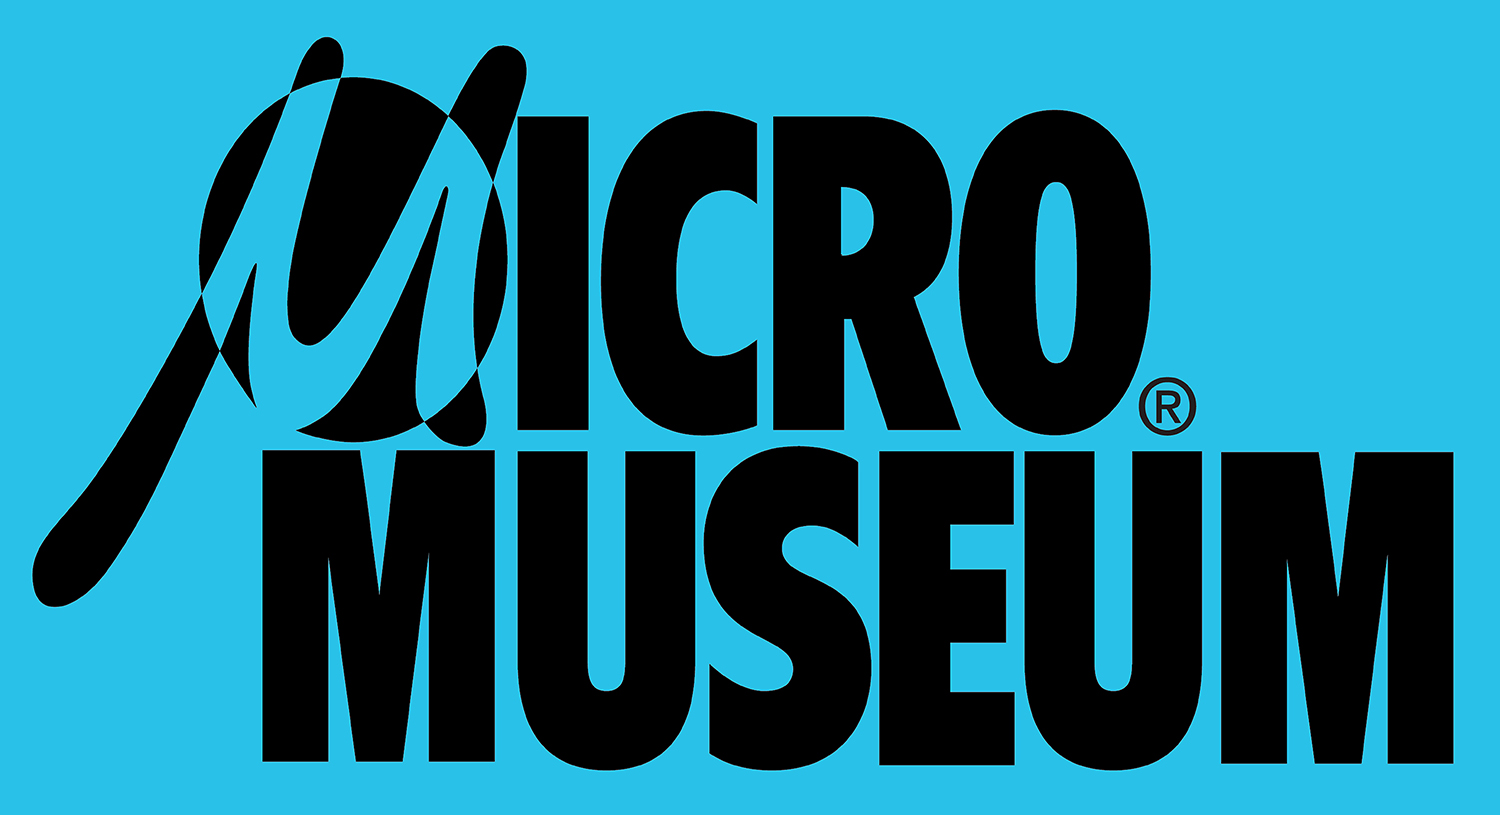 Micromuseum